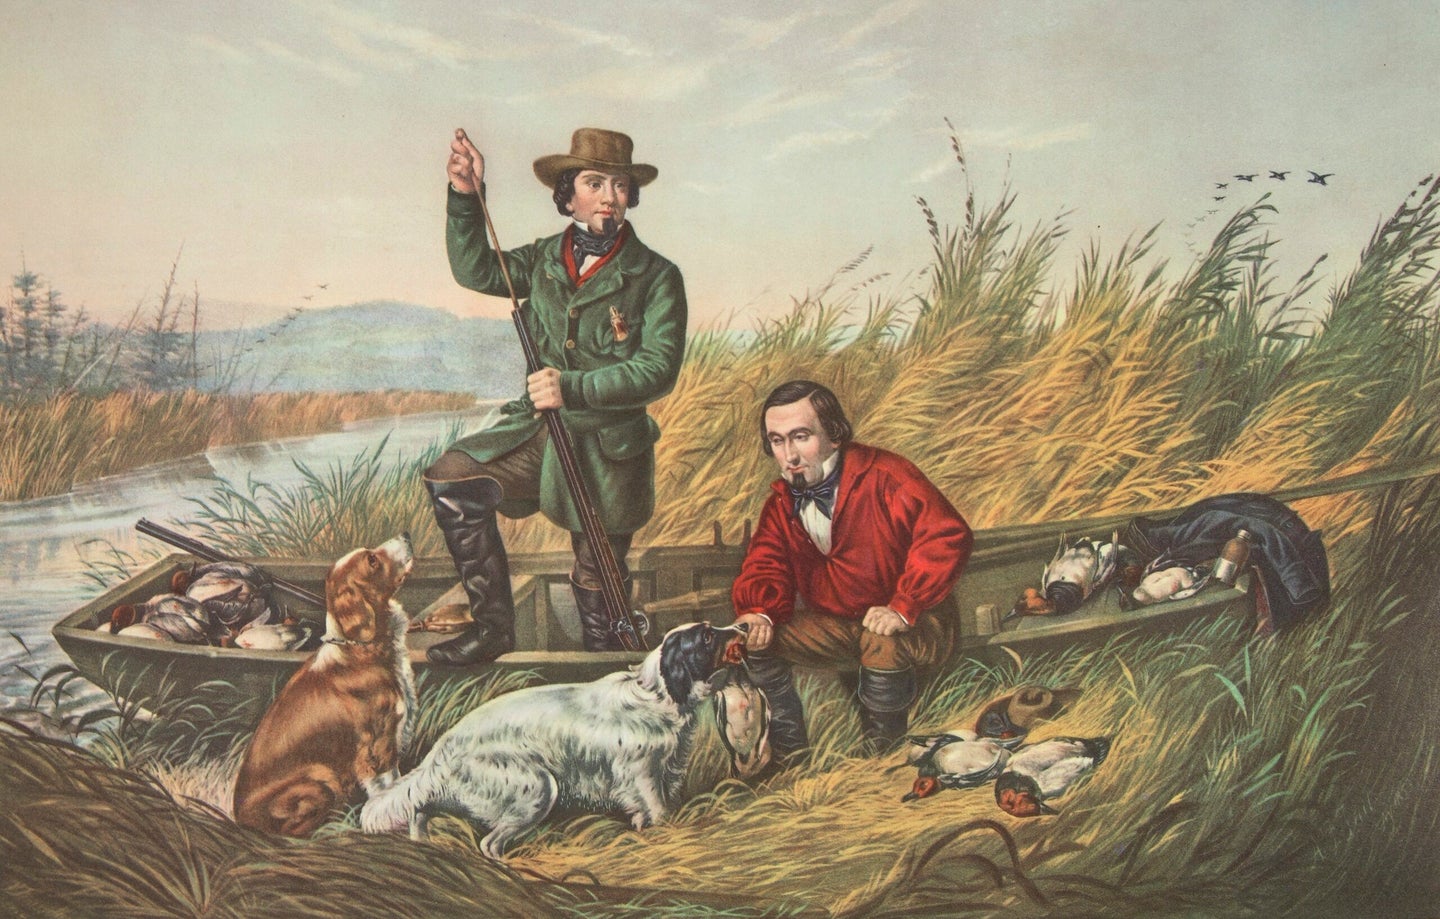 Illustration of 1800s hunters.